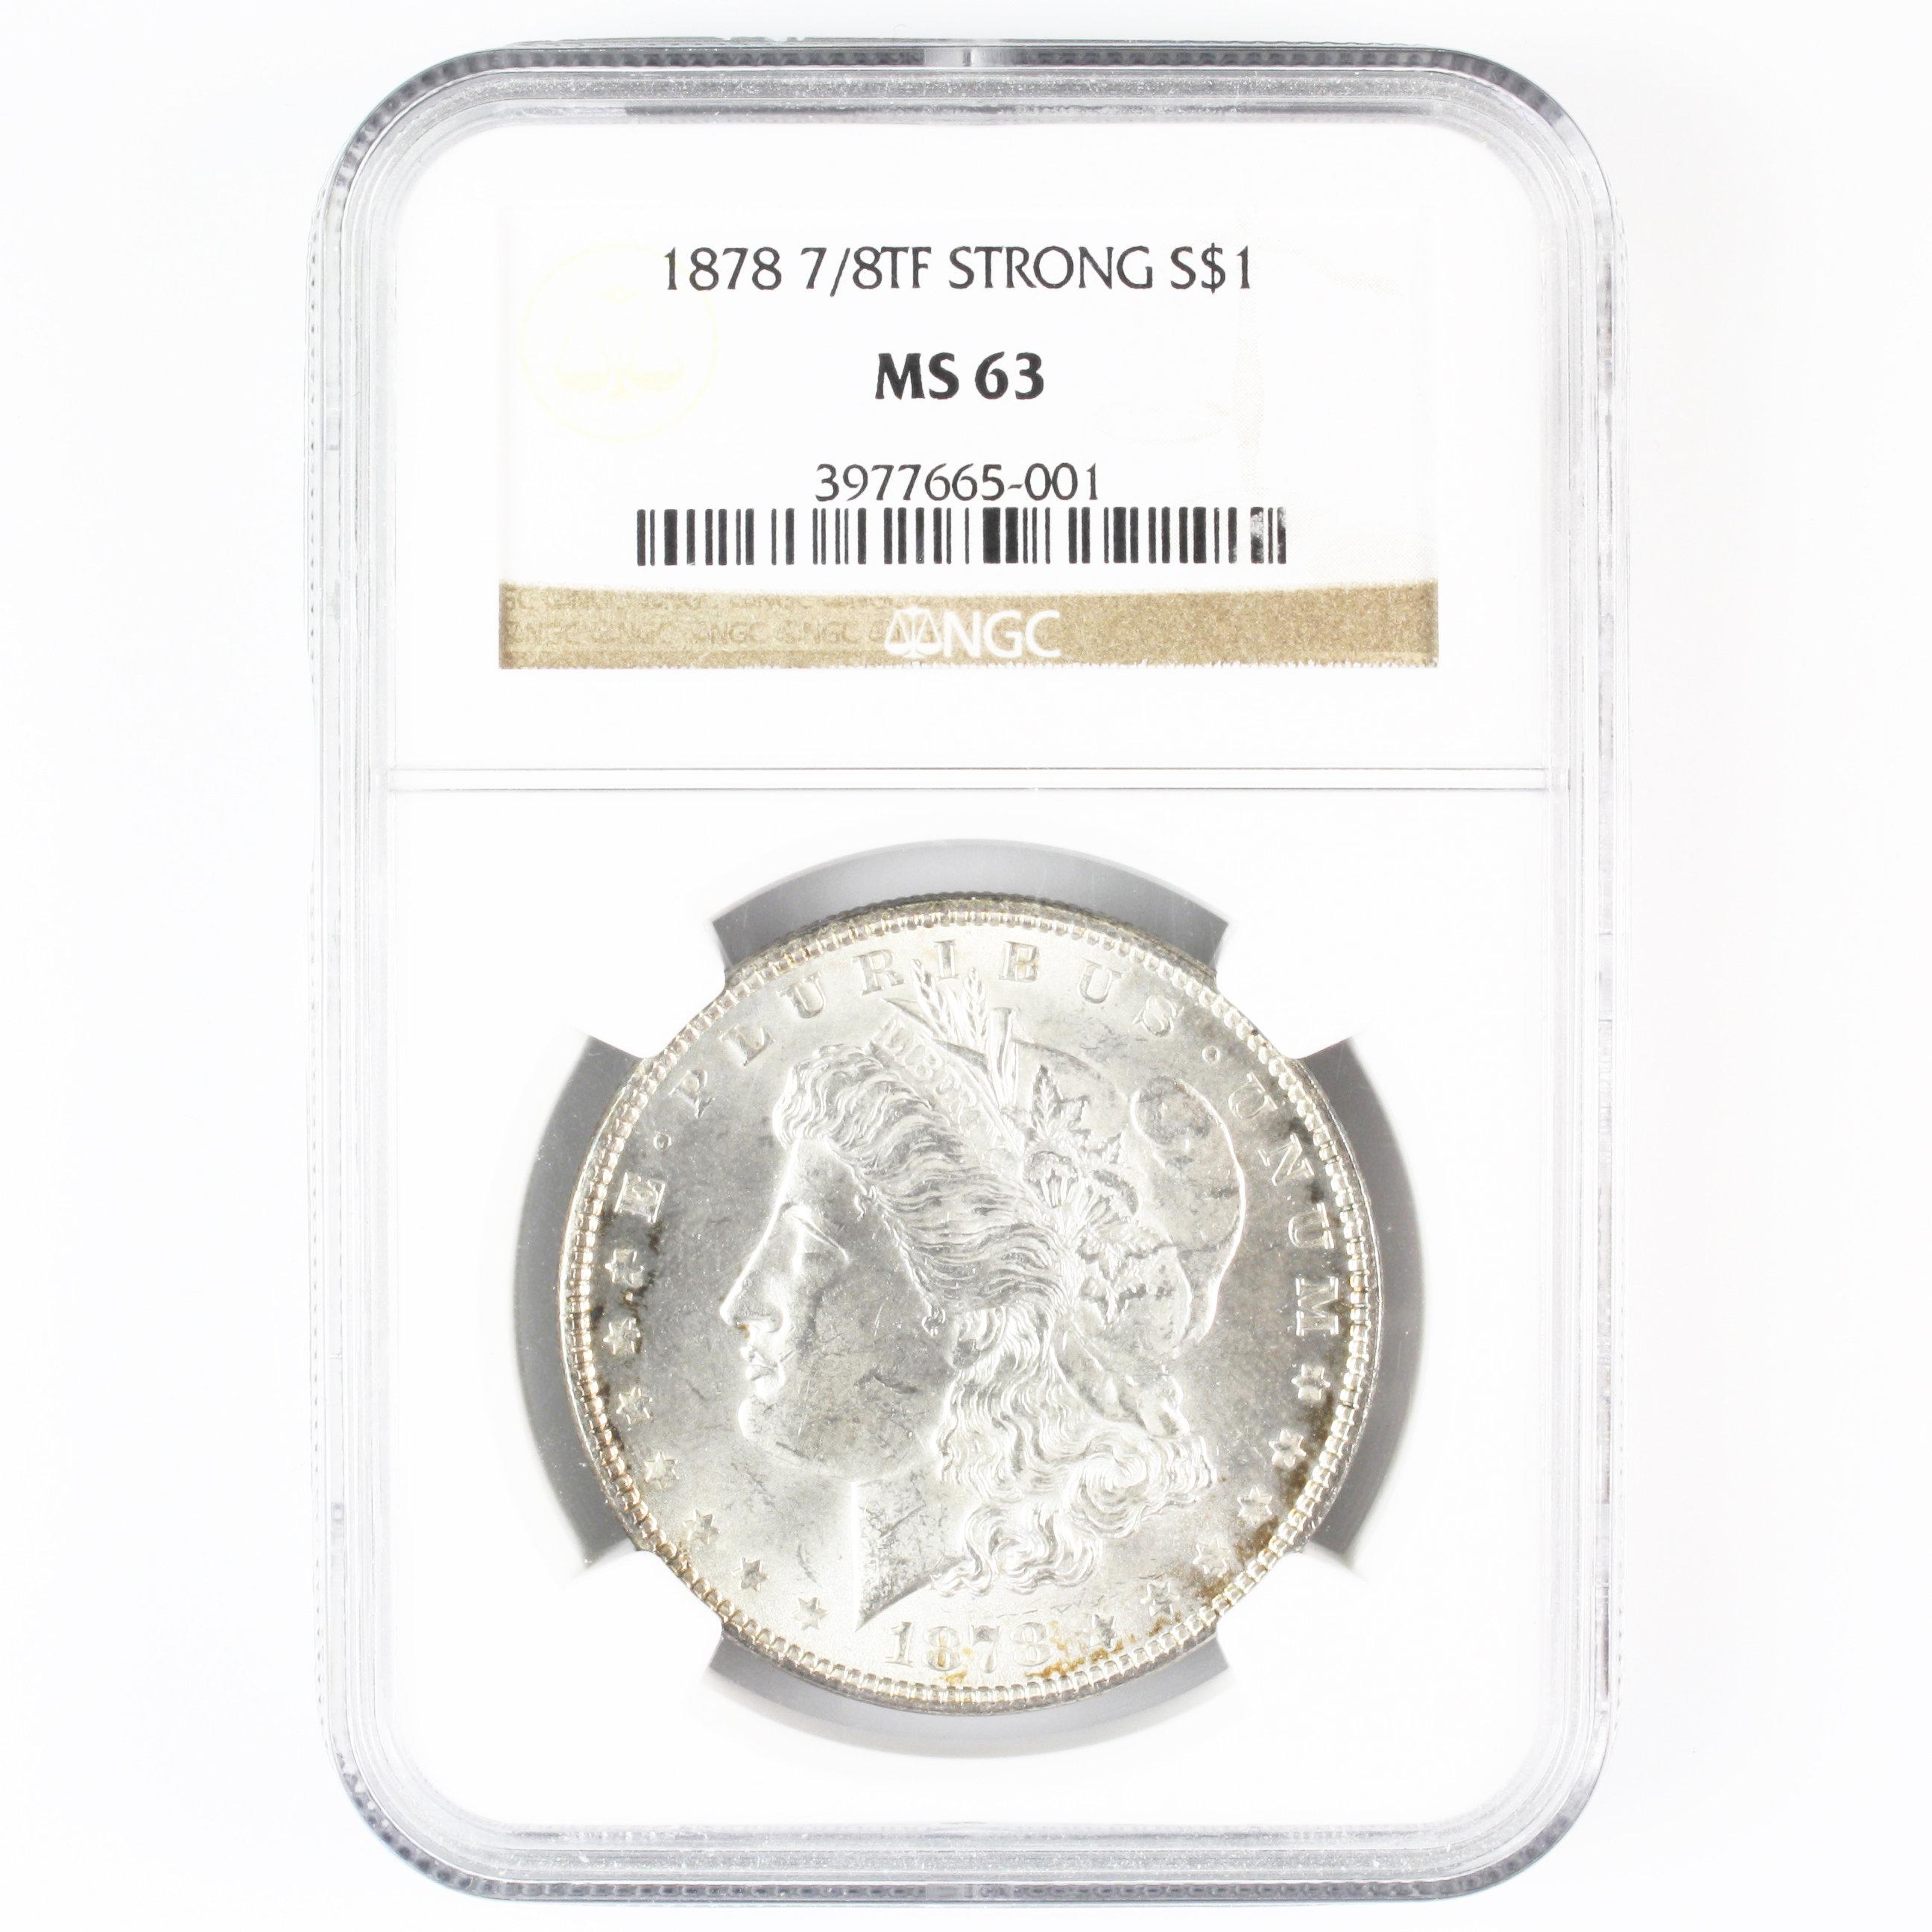 Certified 1878 7/8TF strong U.S. Morgan silver dollar